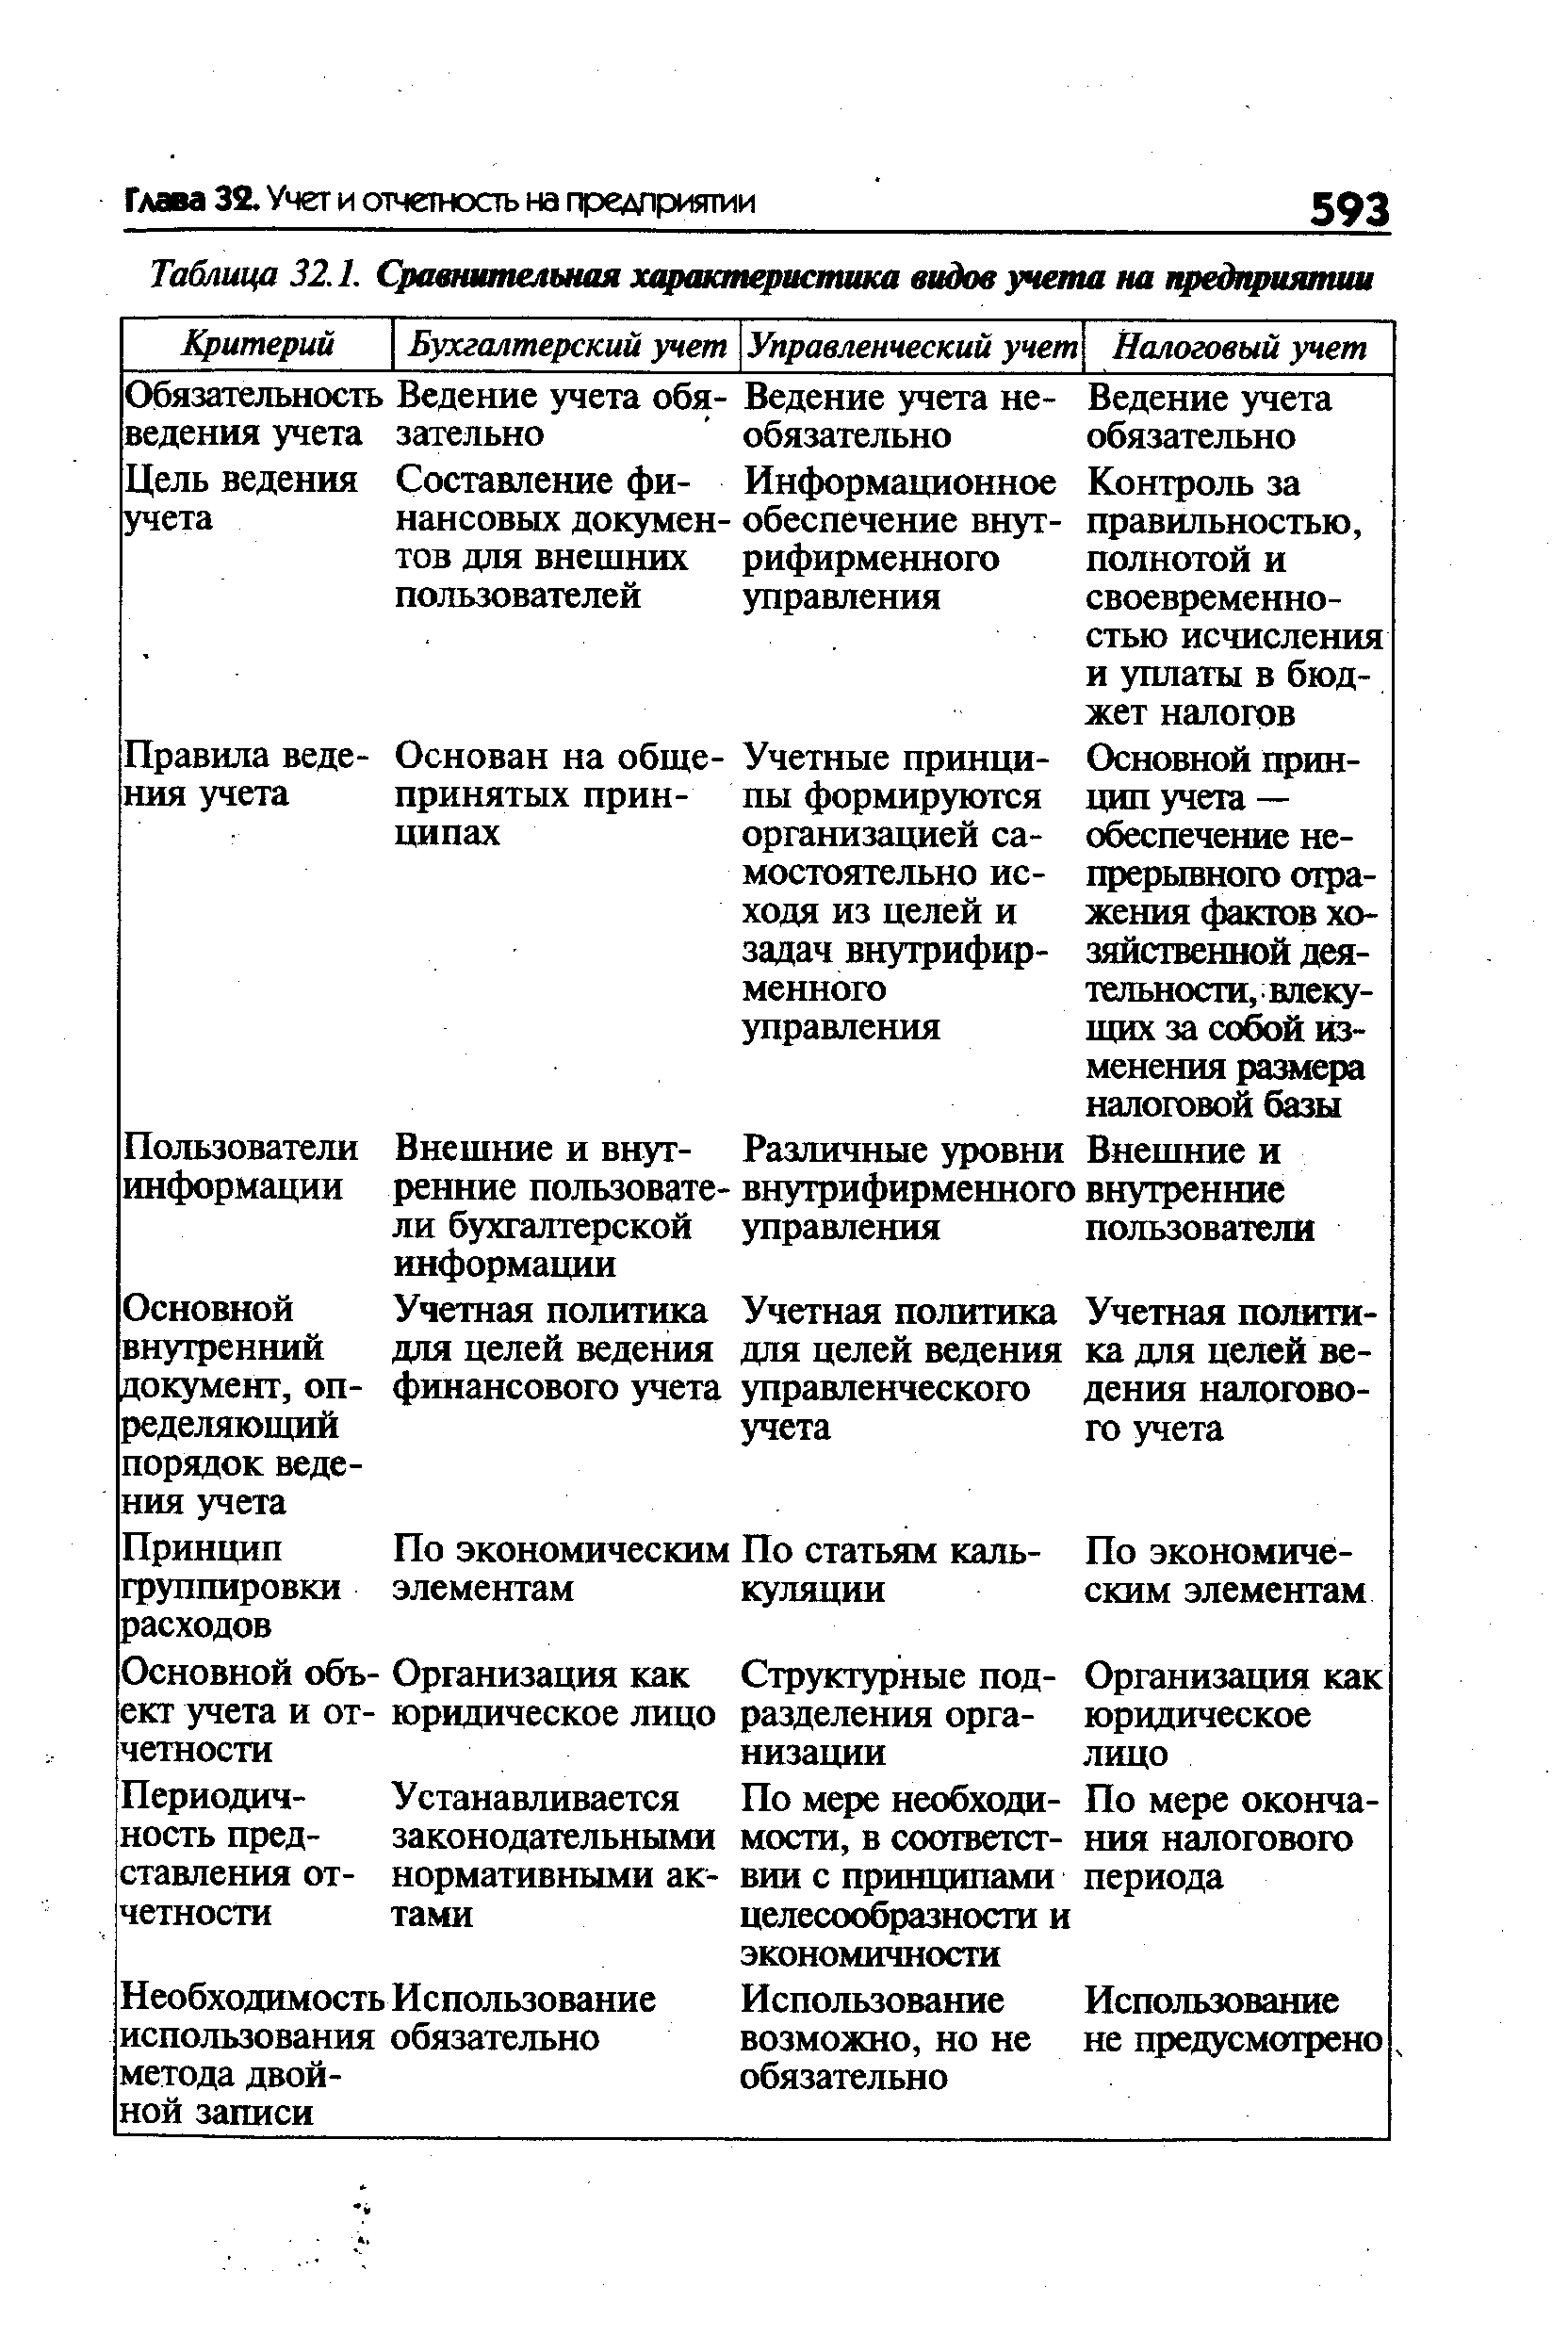 Таблица хозяйственного учета